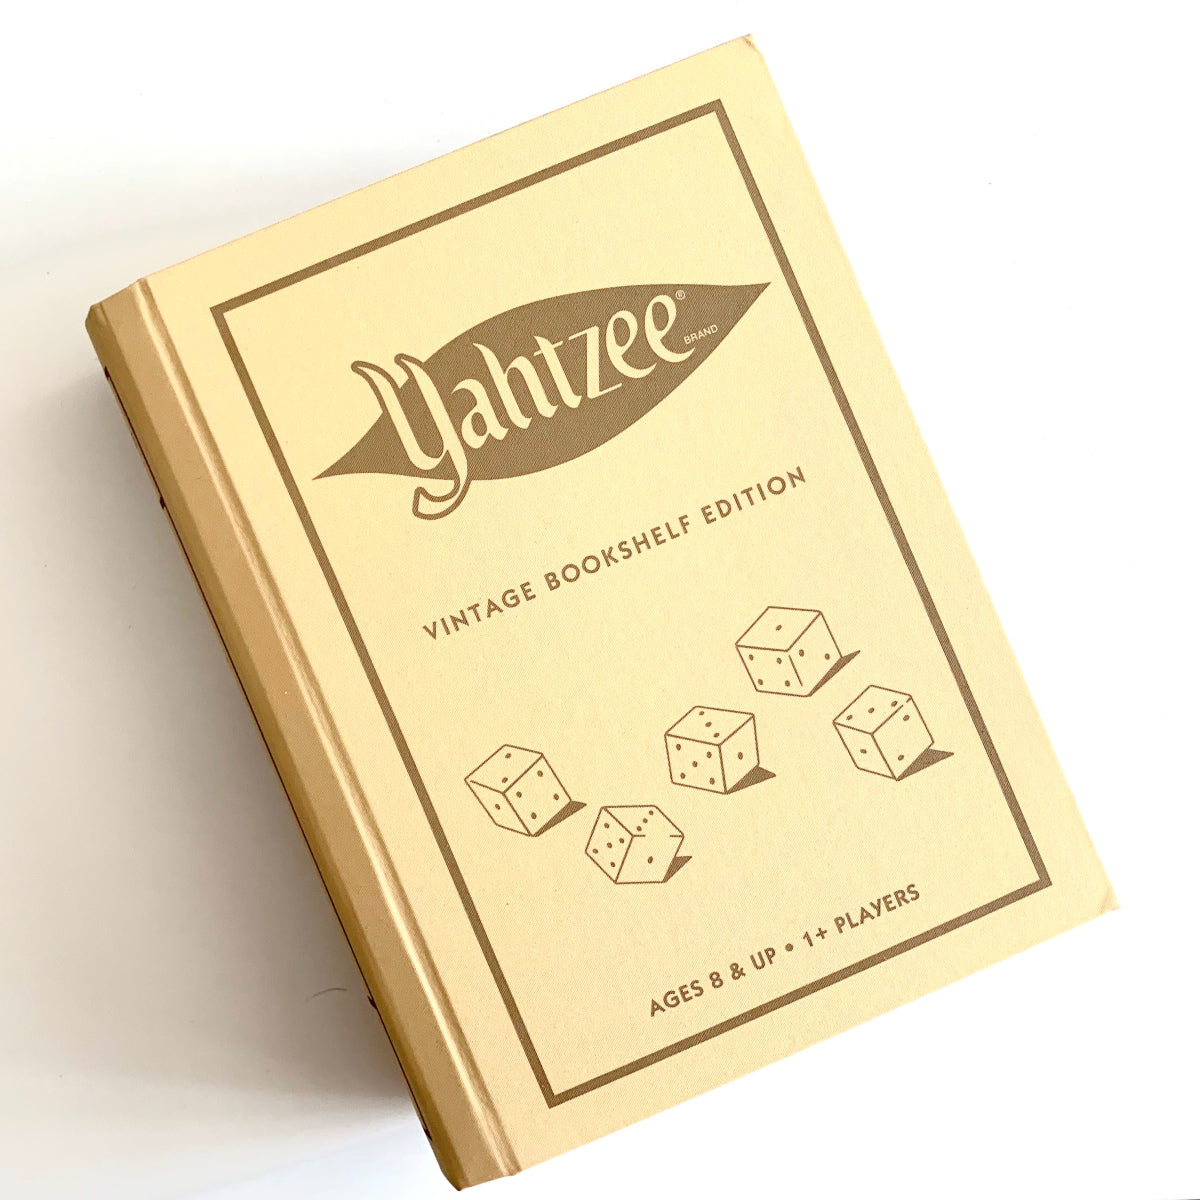 Yahtzee Vintage Bookshelf Edition